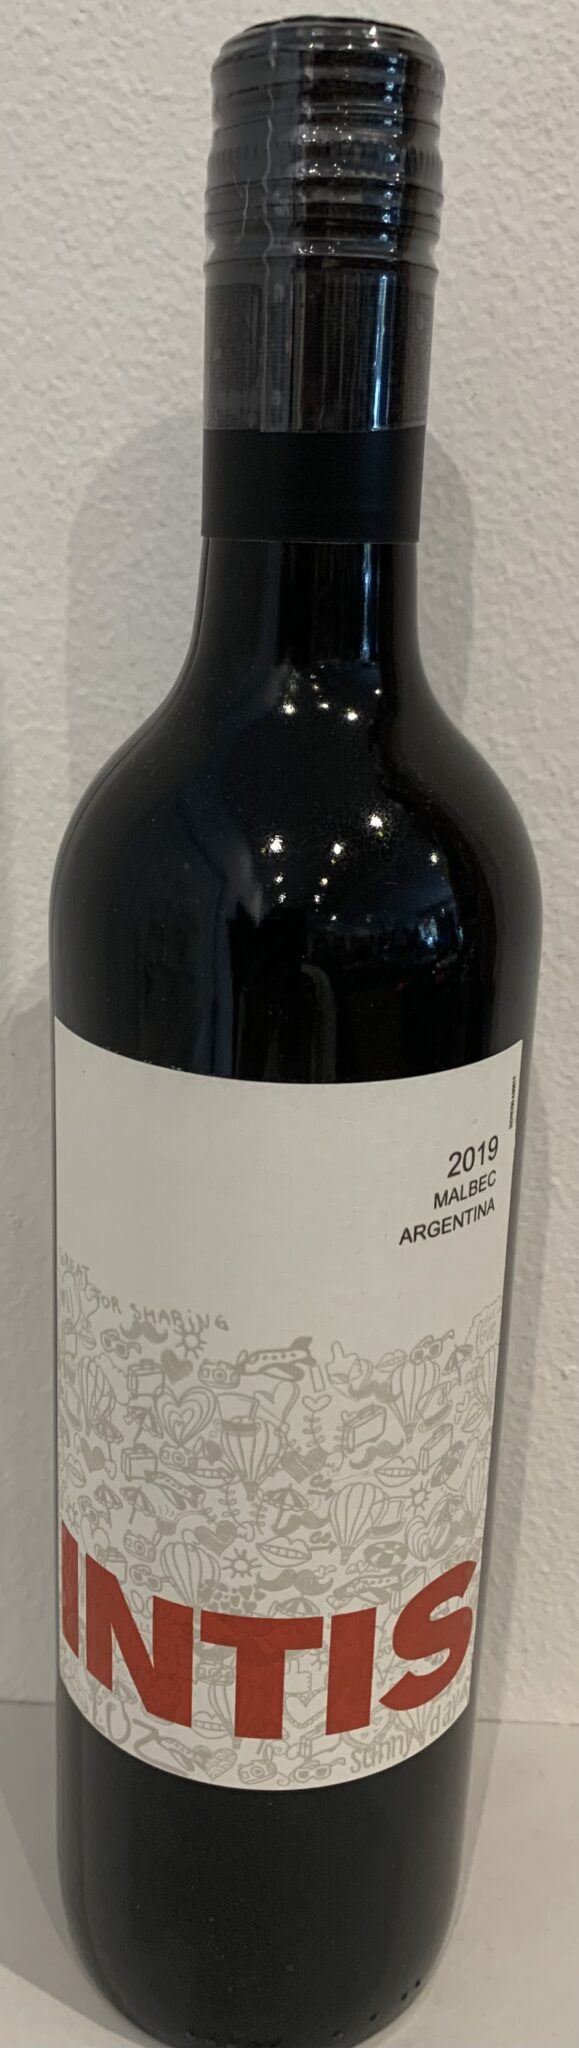 Vin rouge argentin - Domaine Intis - 2019